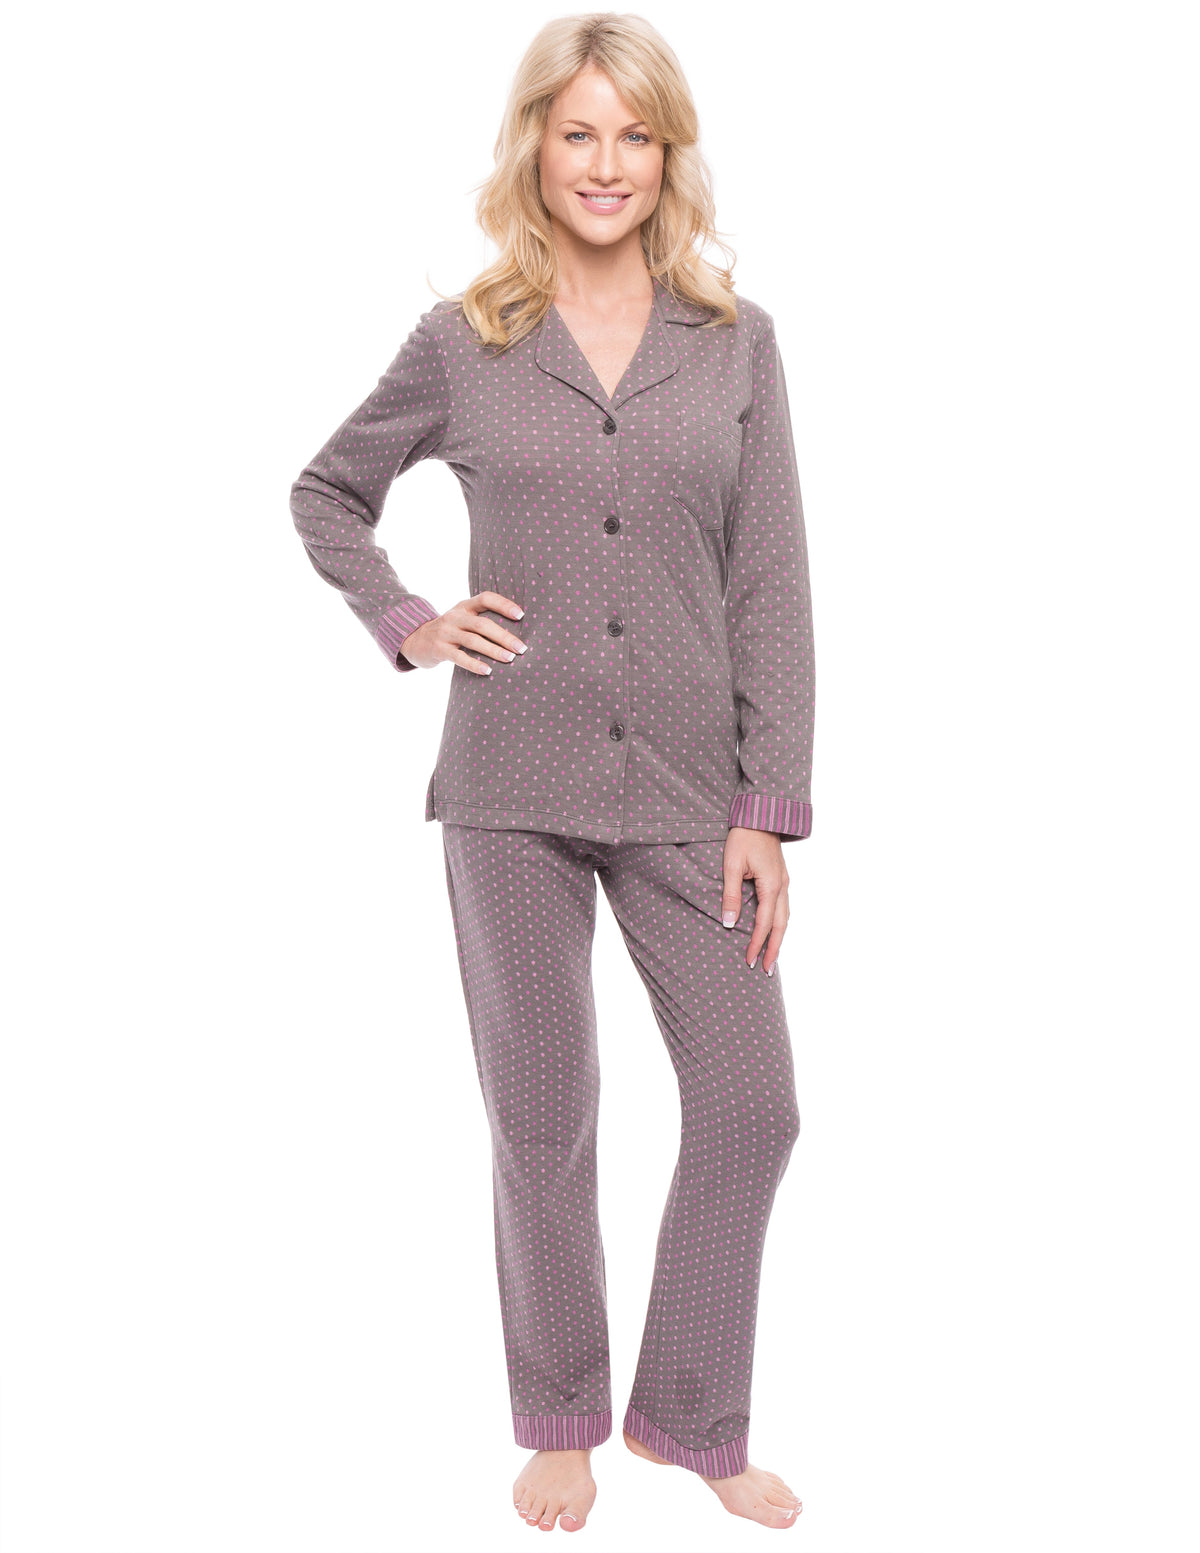 Women's Double Layer Knit Jersey Pajama Sleepwear Set - Polka Dots Charcoal/Pink